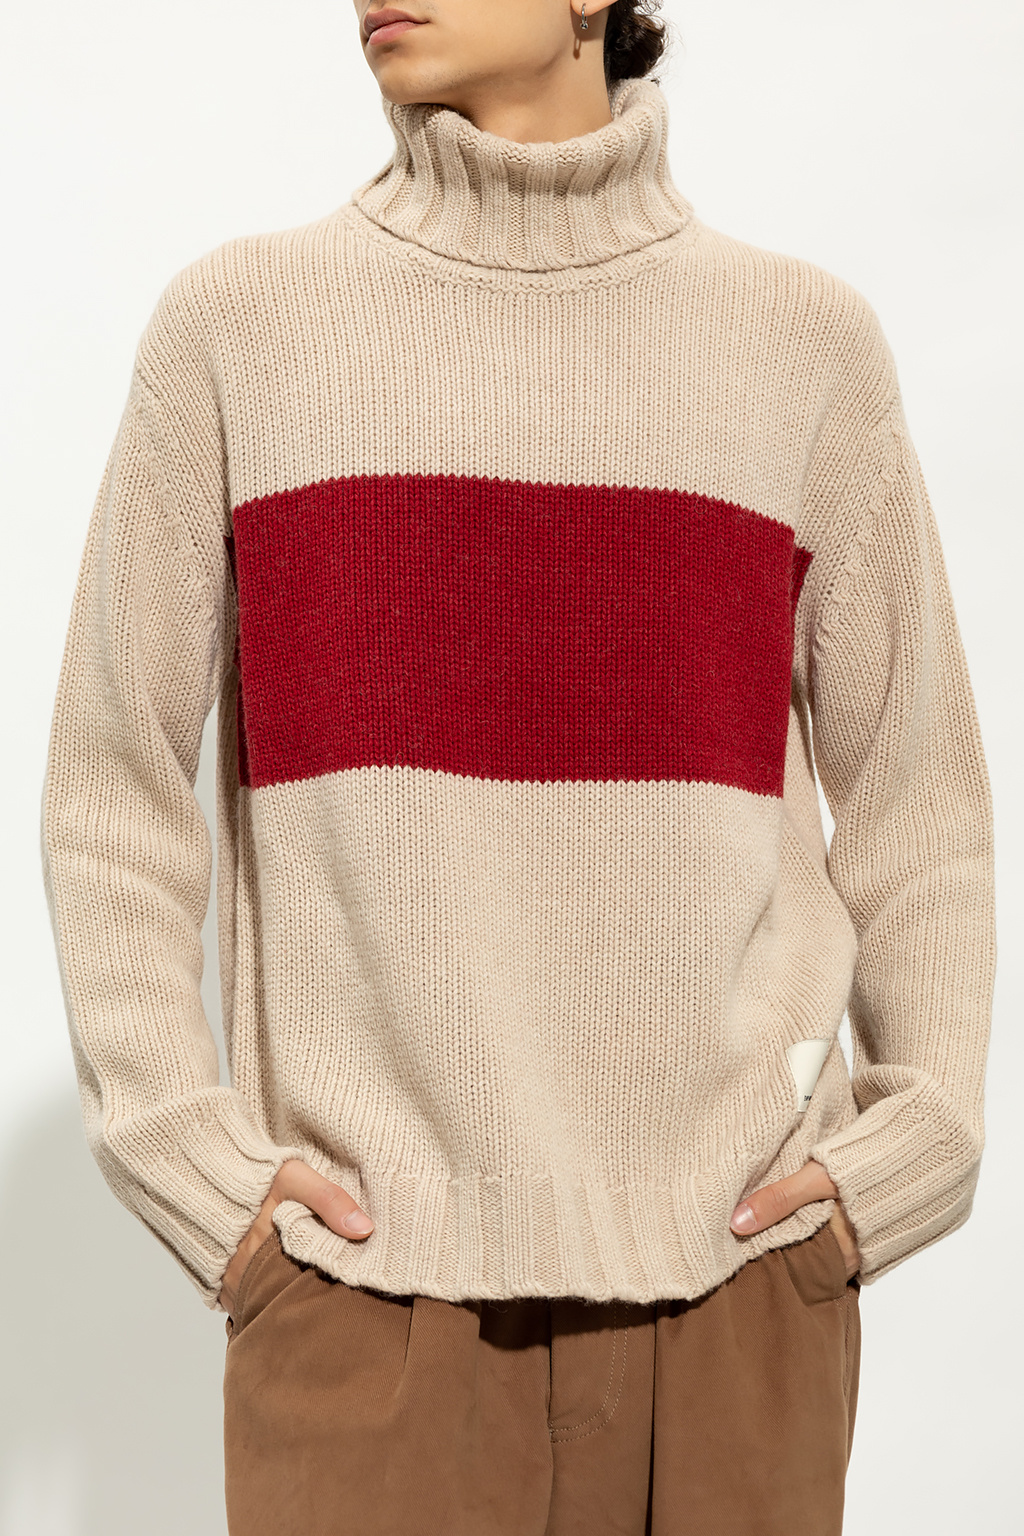 Emporio Armani Wool turtleneck sweater